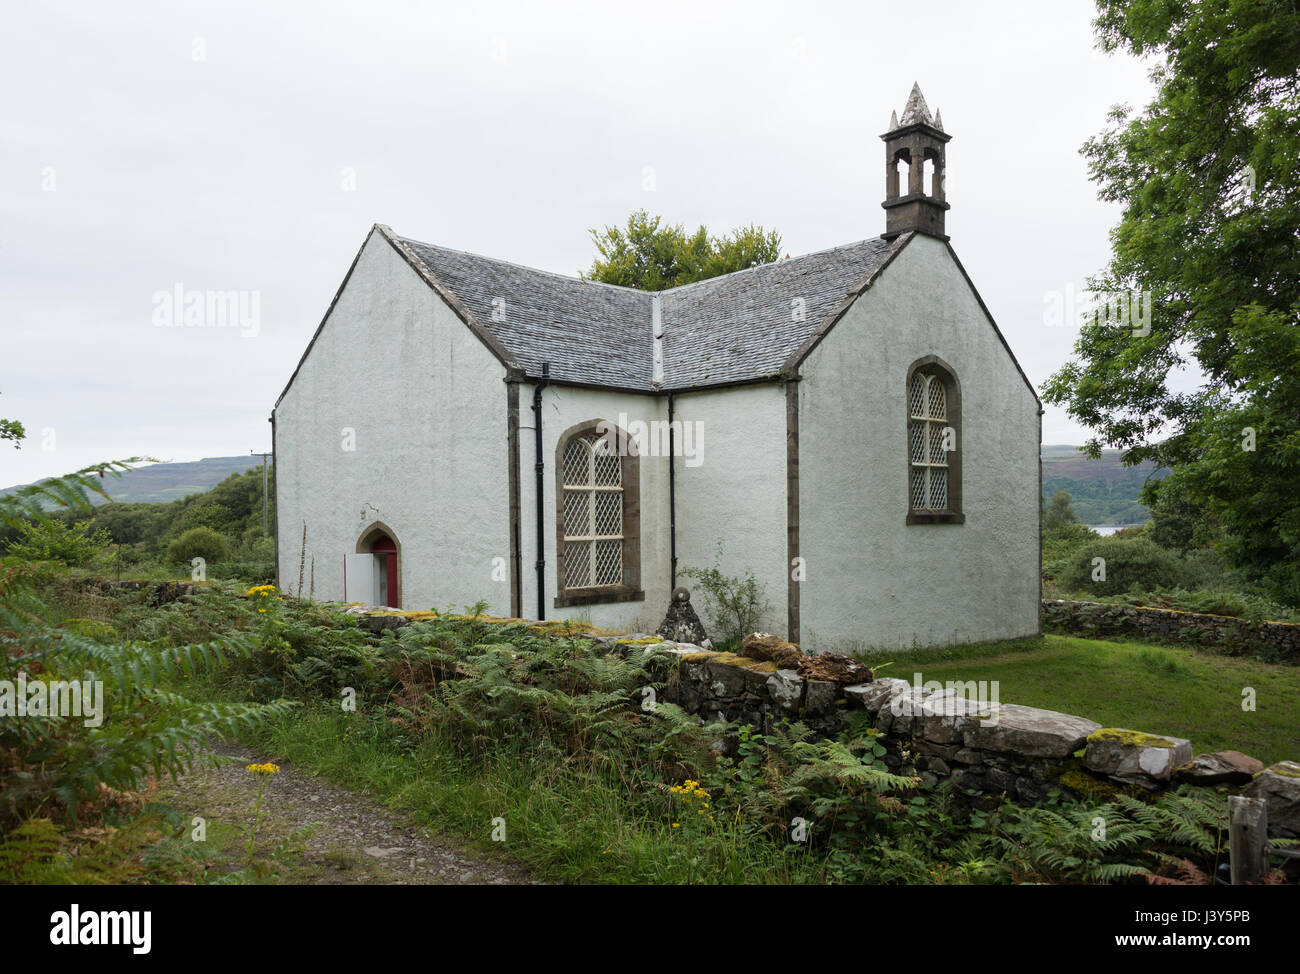 The church at Ardalum on the Isle of Ulva, Scotland. Stock Photo